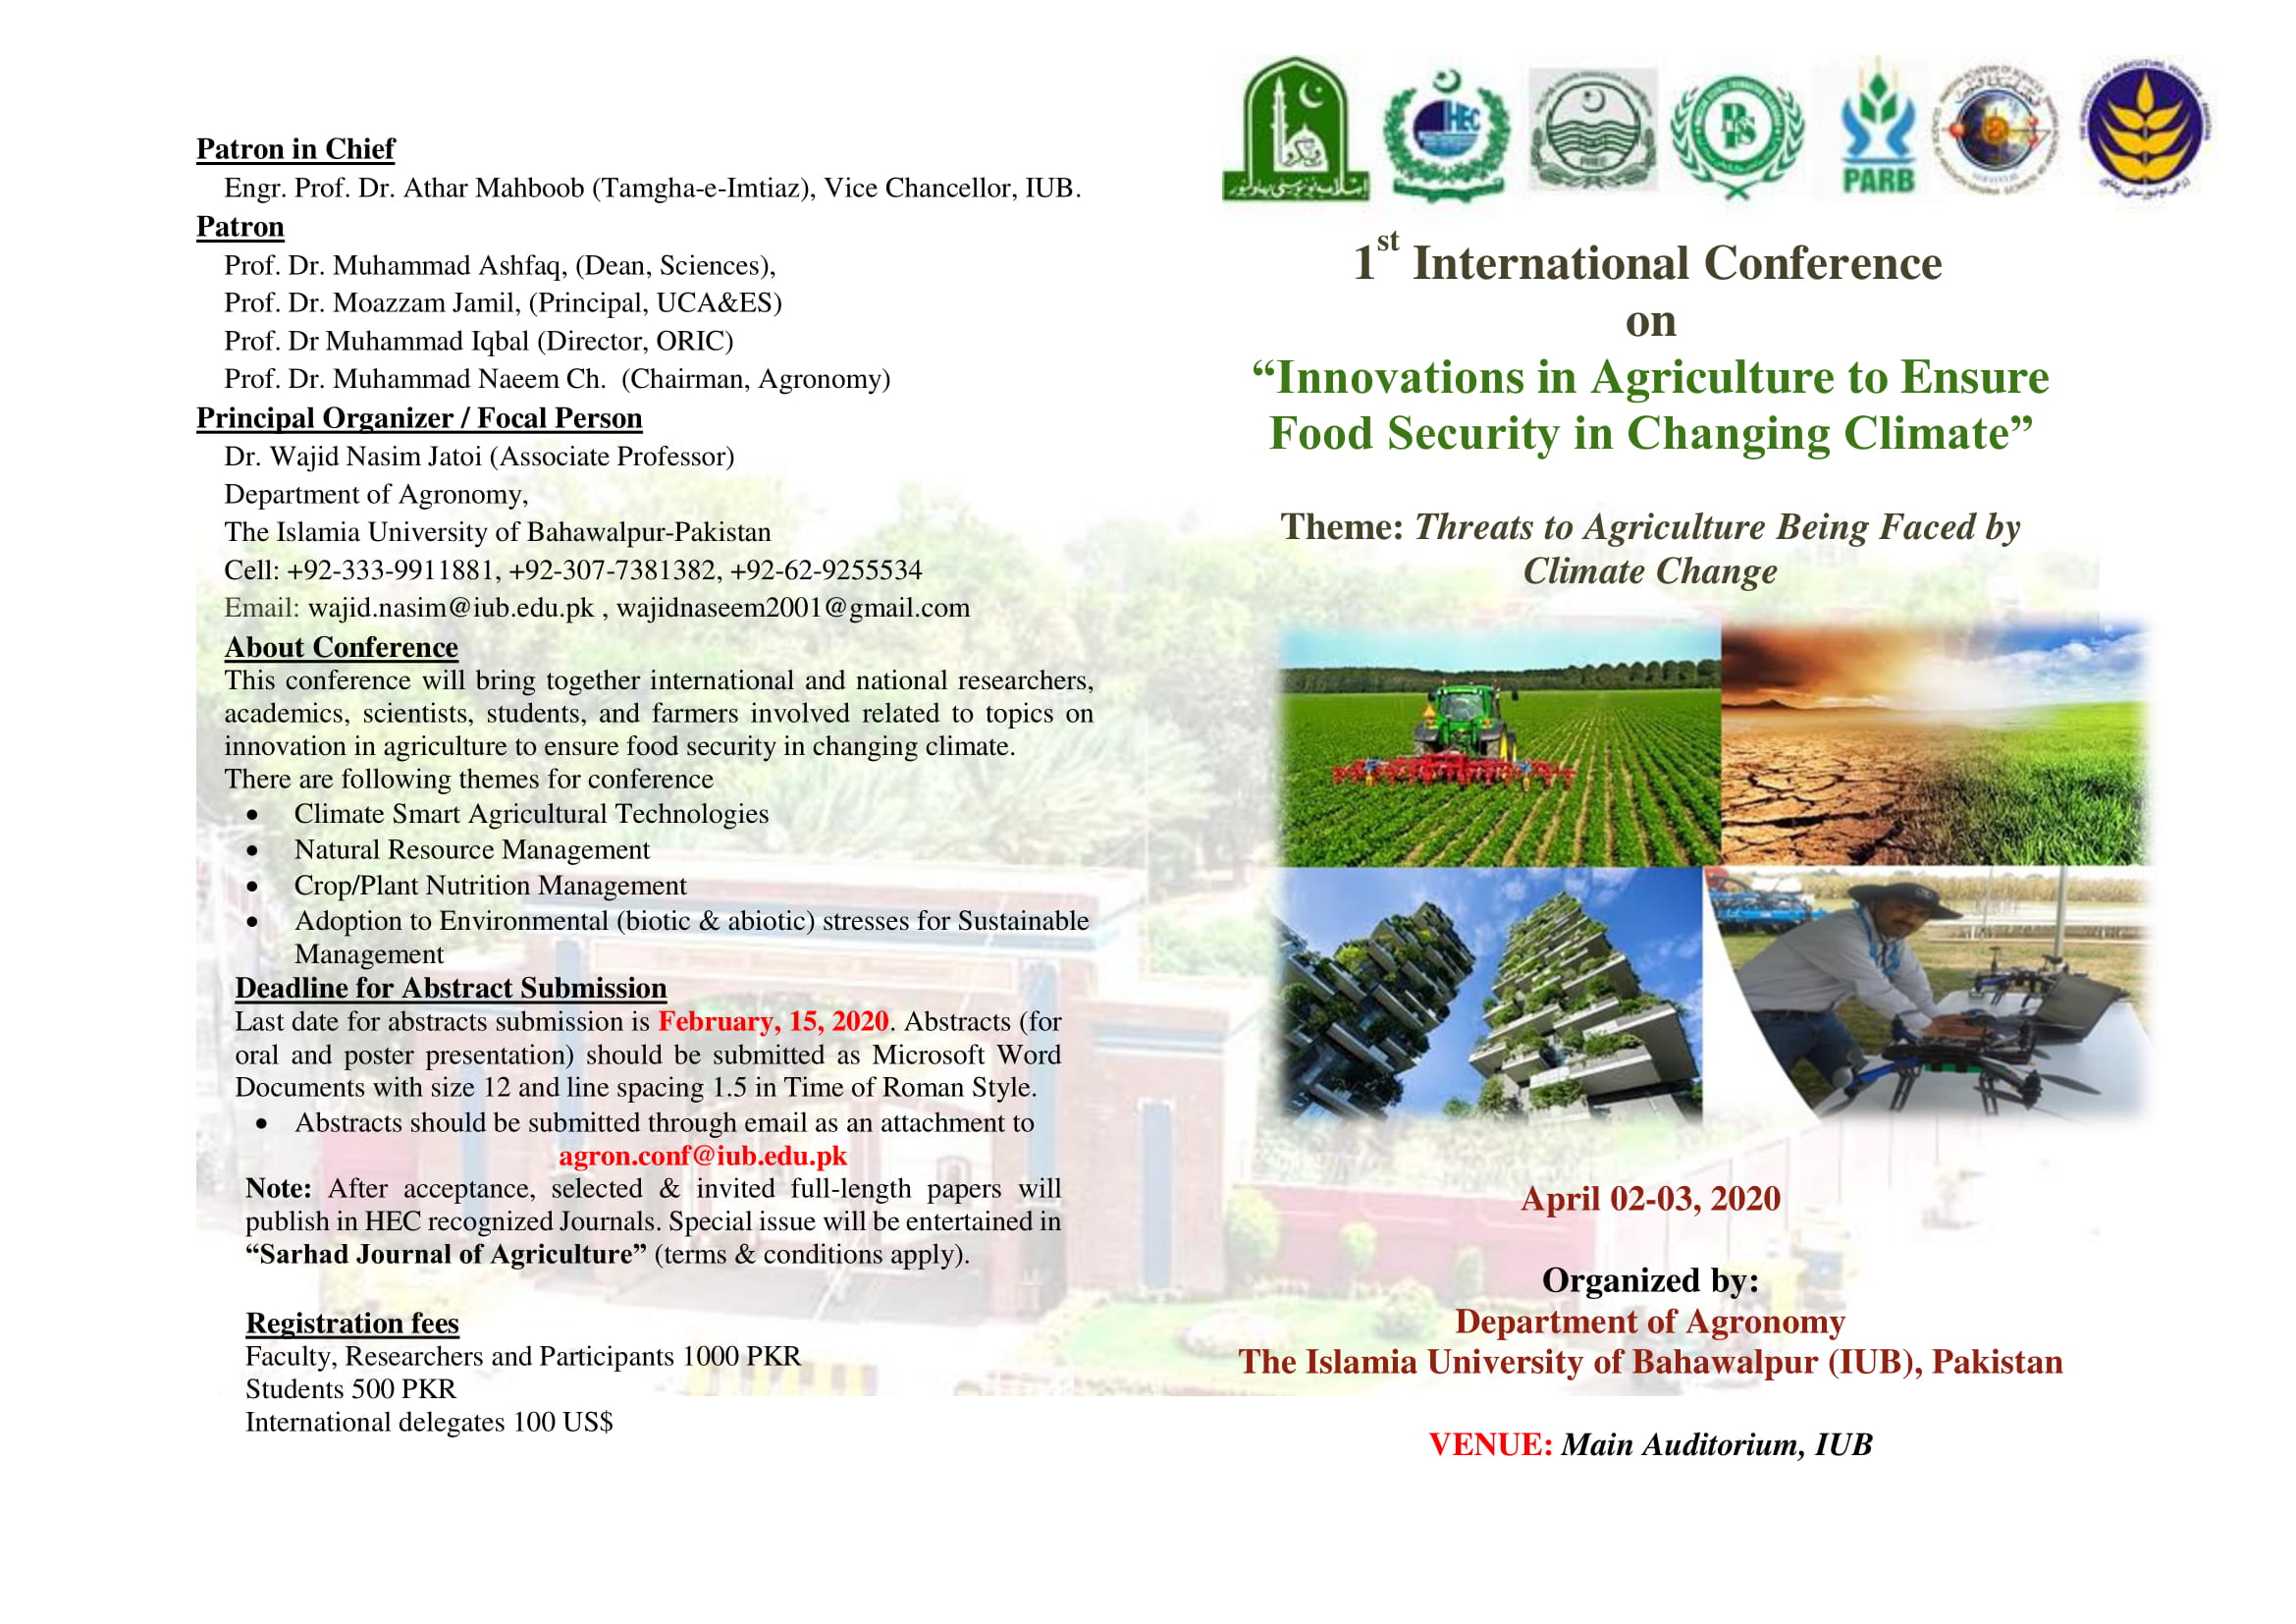 Agronomy International Conference IUB - Pakistan 2020